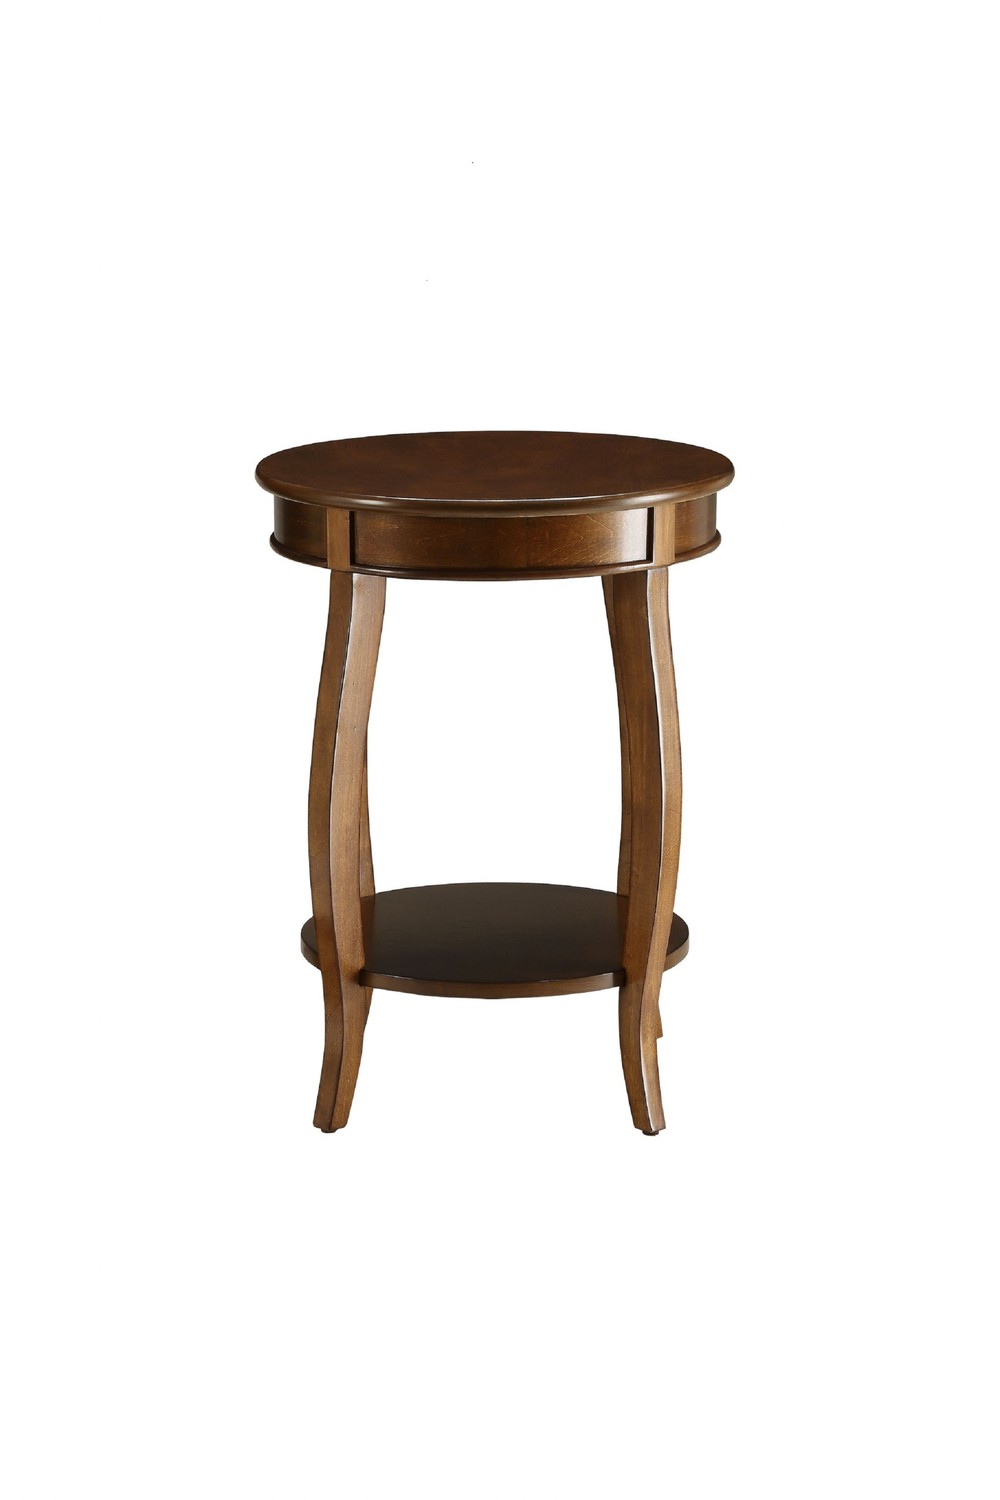 18" X 18" X 24" Walnut Solid Wood Leg Side Table